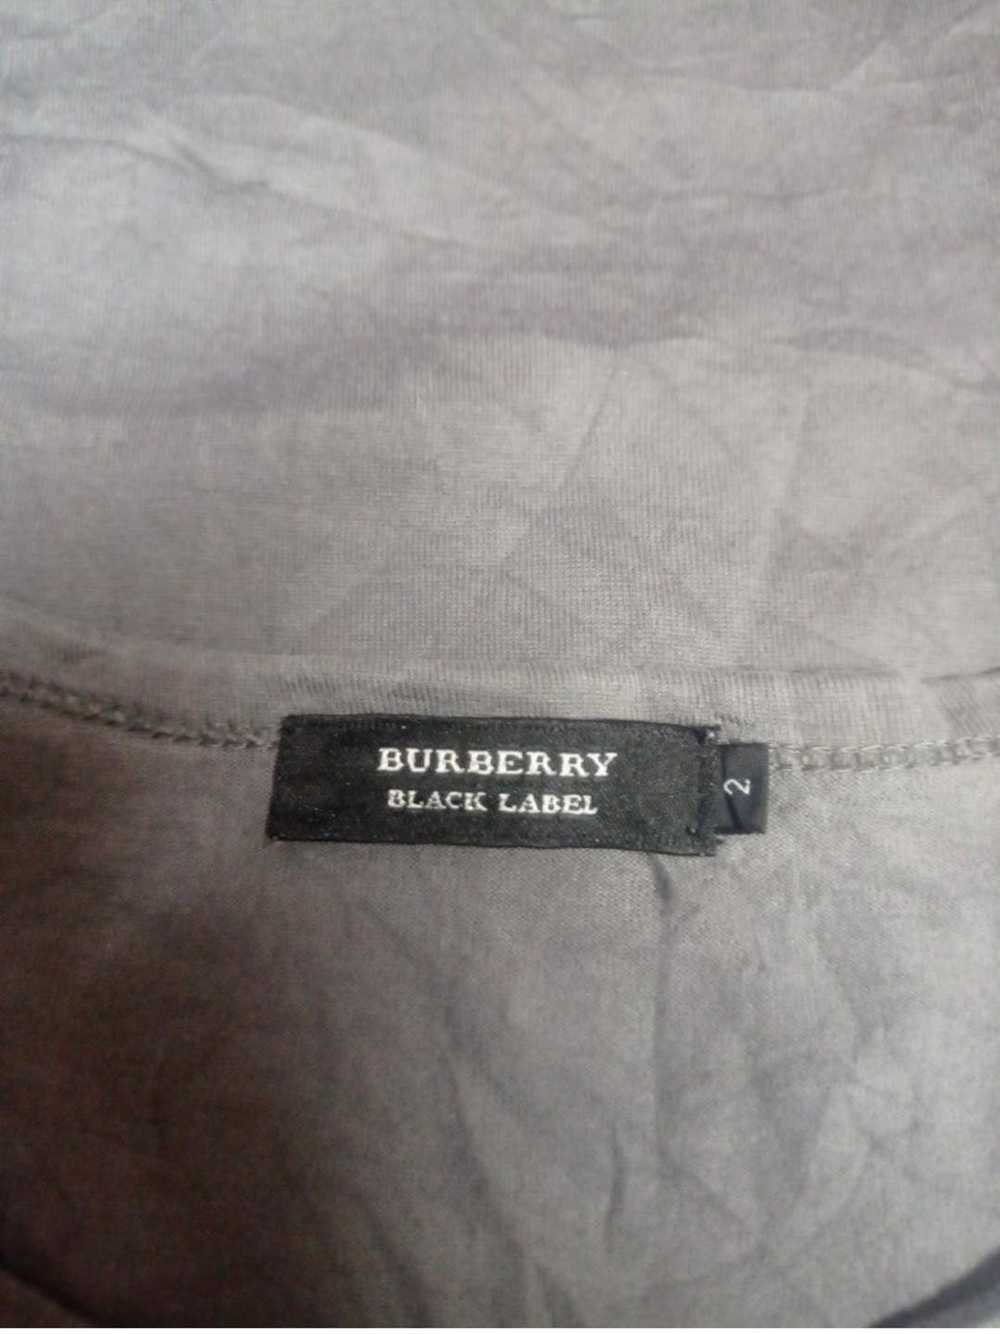 Burberry Burberry London black label ringer tee s… - image 2